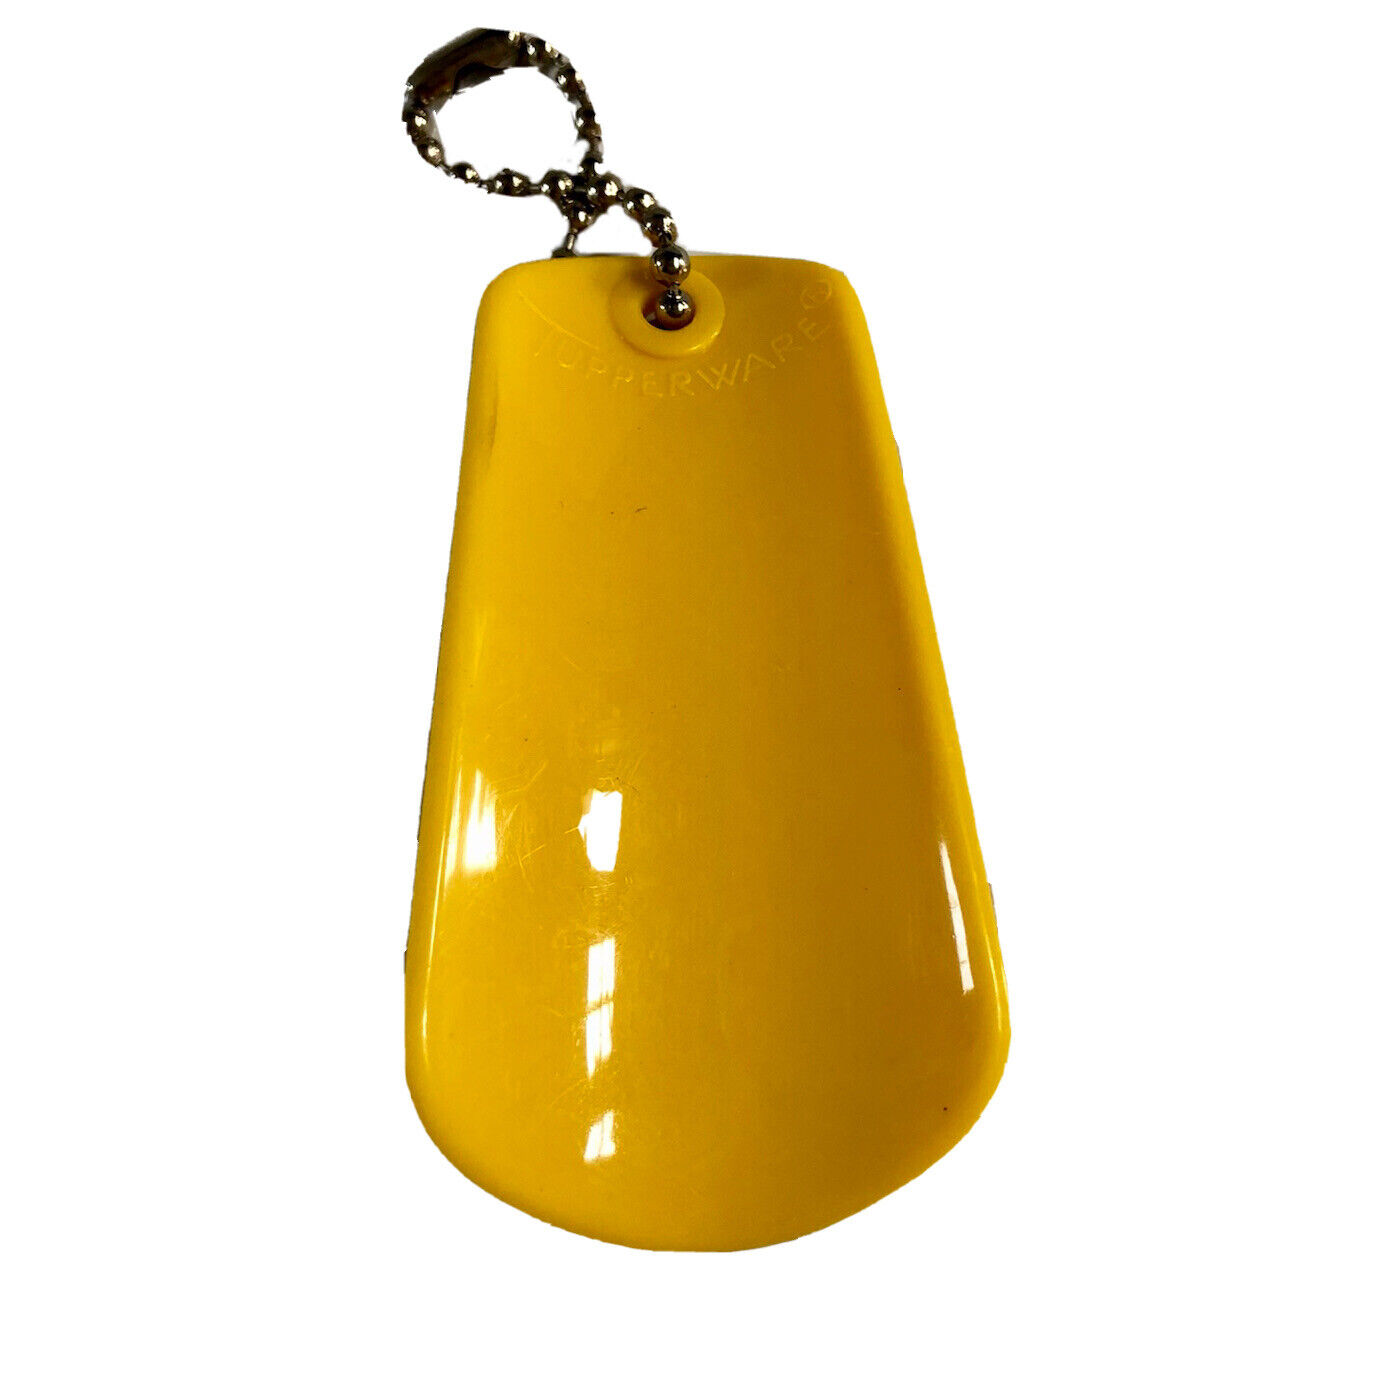 Vintage Keychain TUPPERWARE SHOE HORN Key Ring Plastic Fob Yellow 1225-8 Yellow